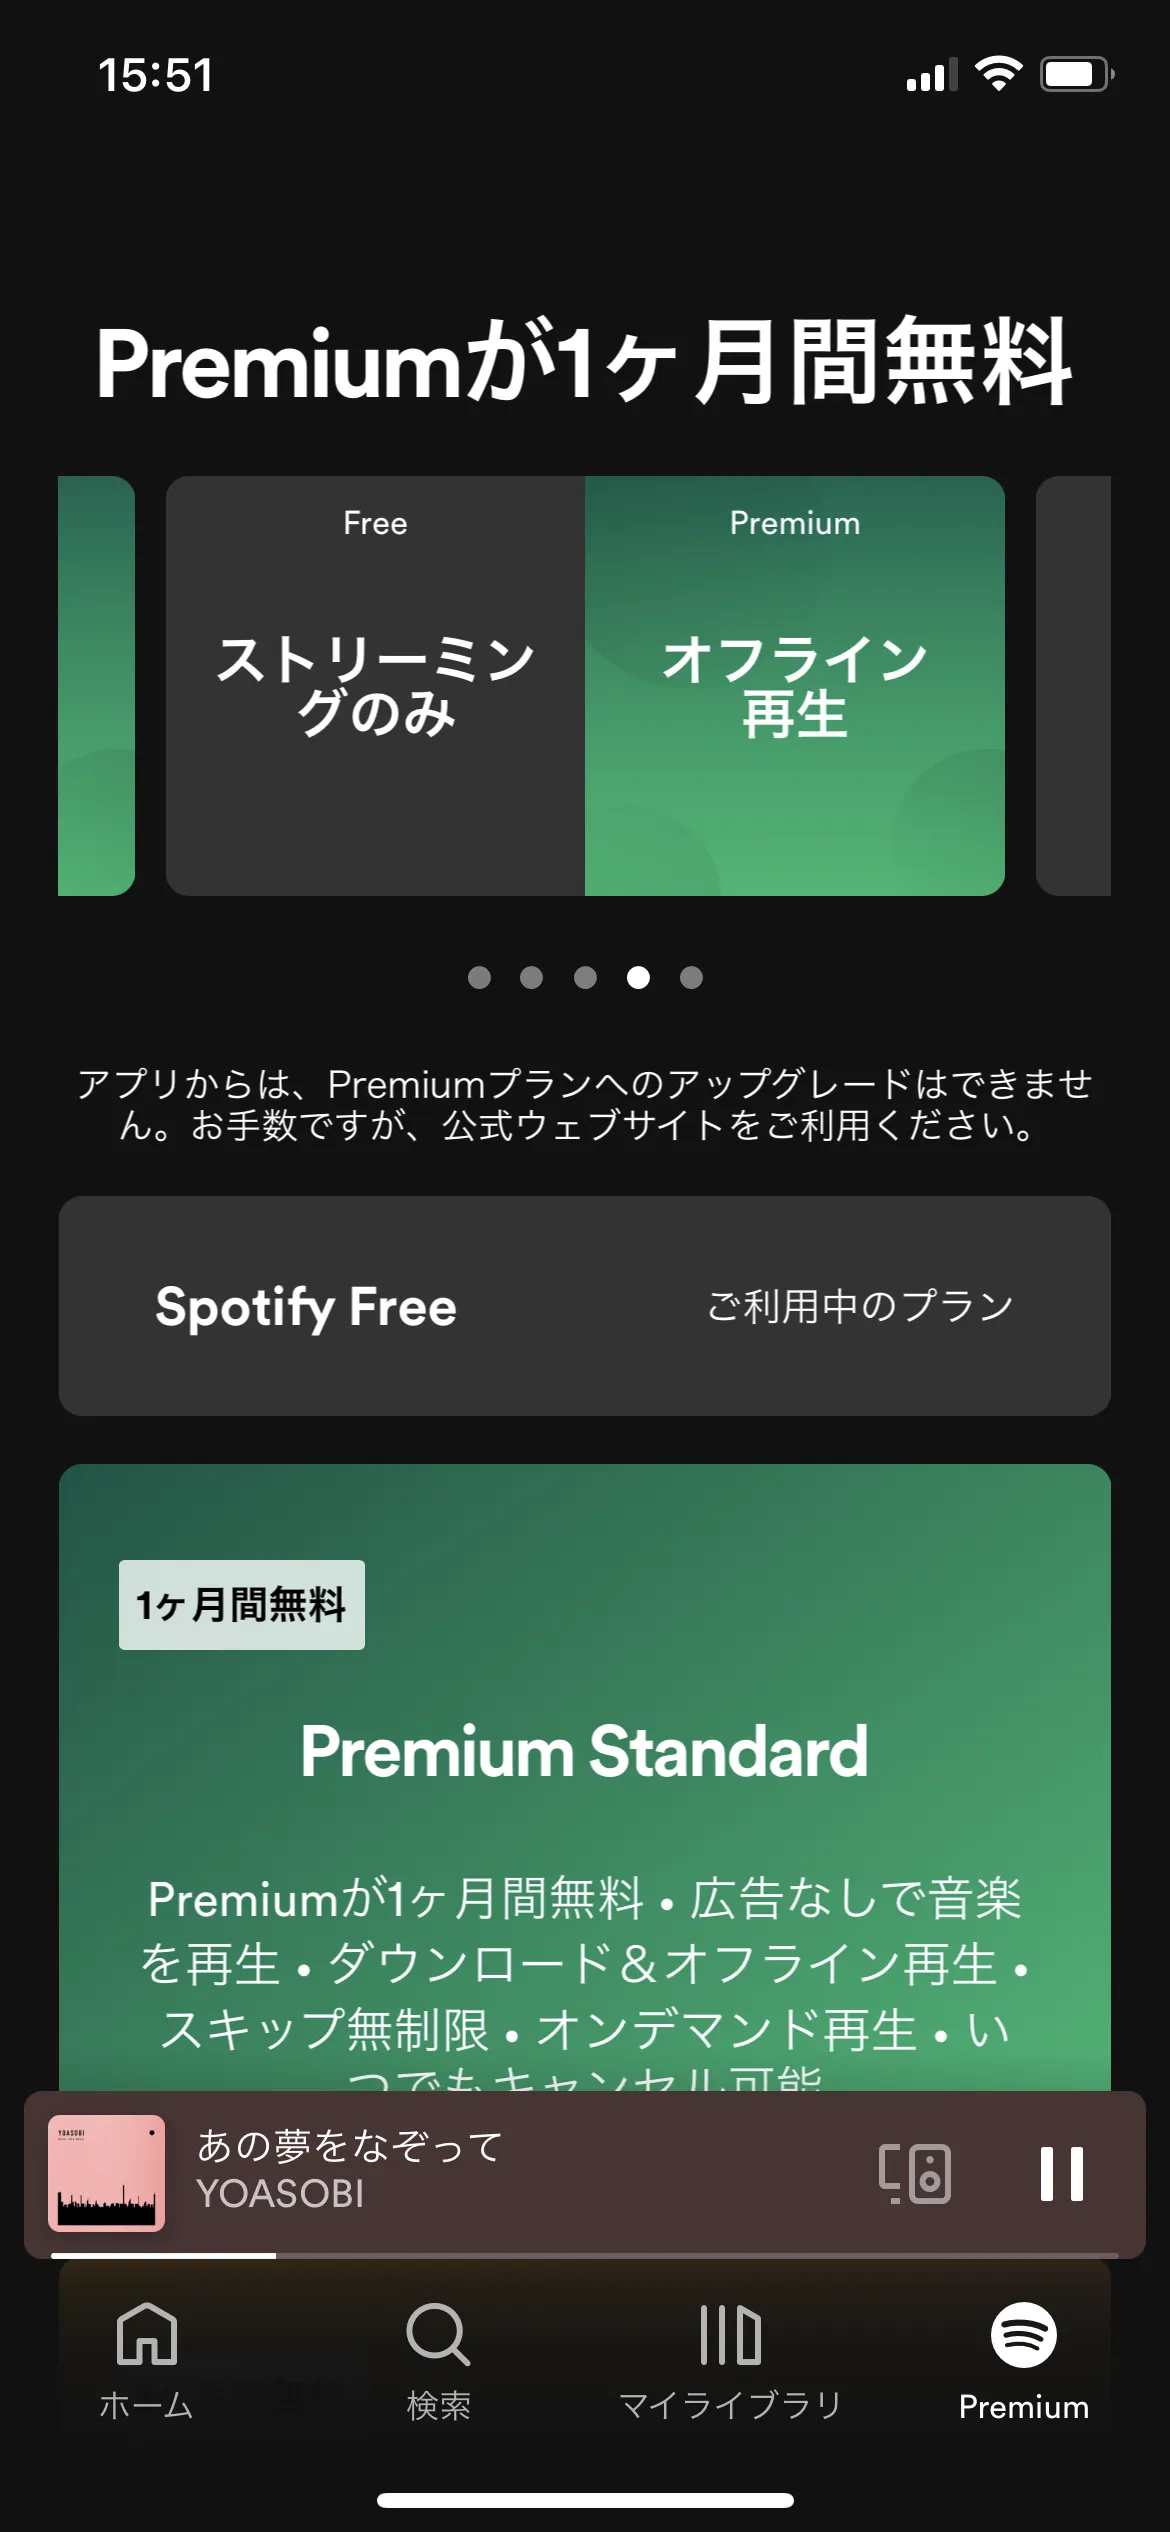 Spotify Premium screen